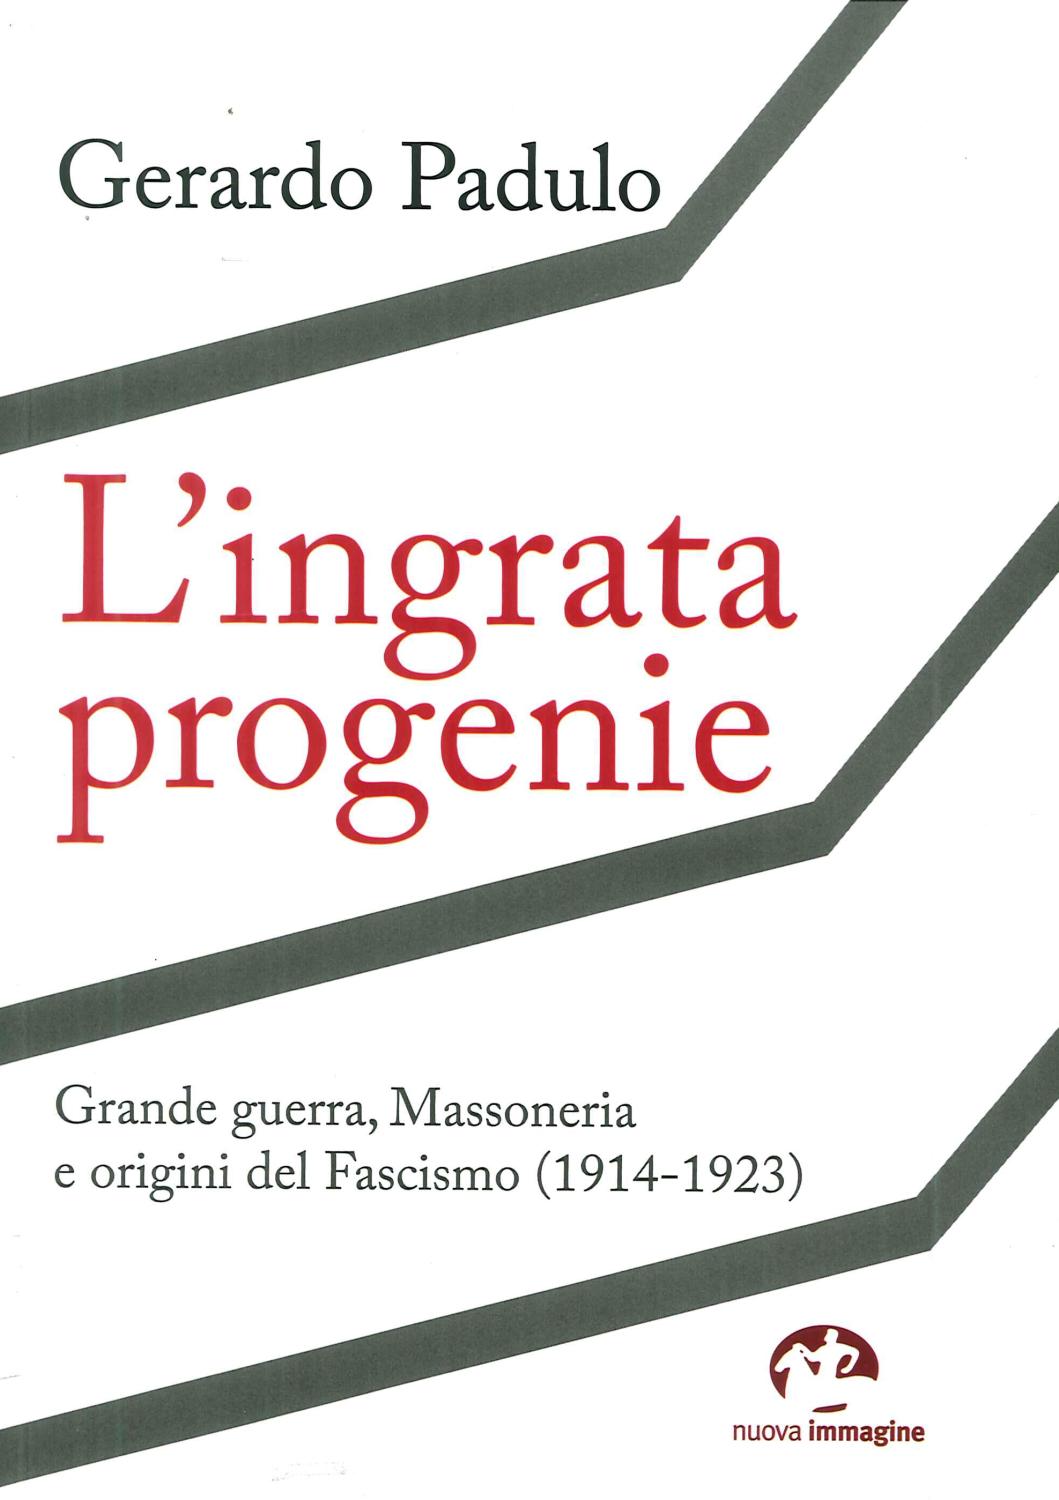 Gerardo PADULO, L’ingrata progenie. Grande guerra, Massoneria e origini del Fascismo (1914-1923), Siena, Nuova Immagine Editrice, 2018, 200 pp.